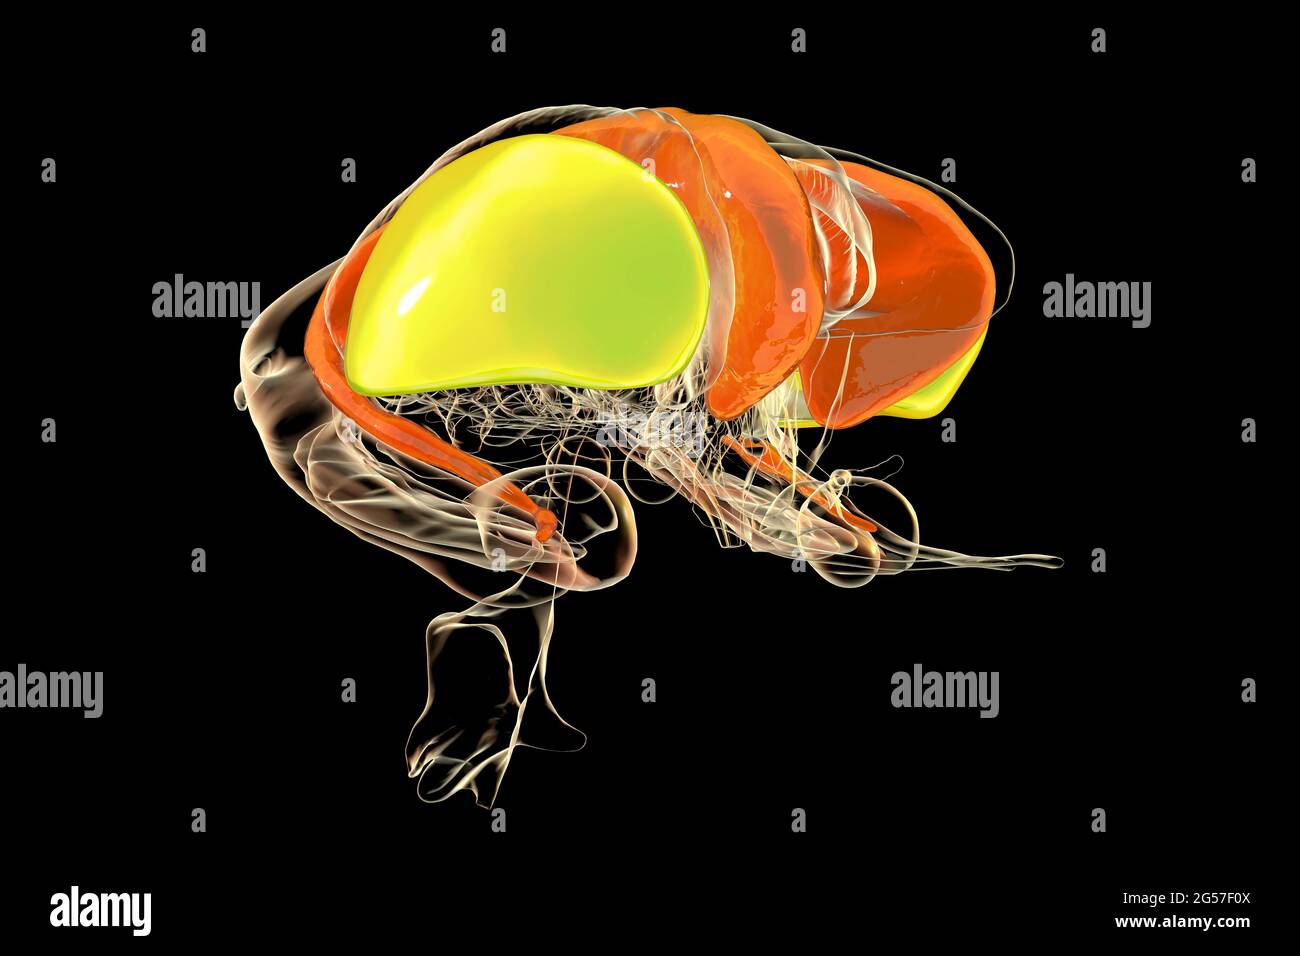 Dorsal striatum in the brain, illustration Stock Photo